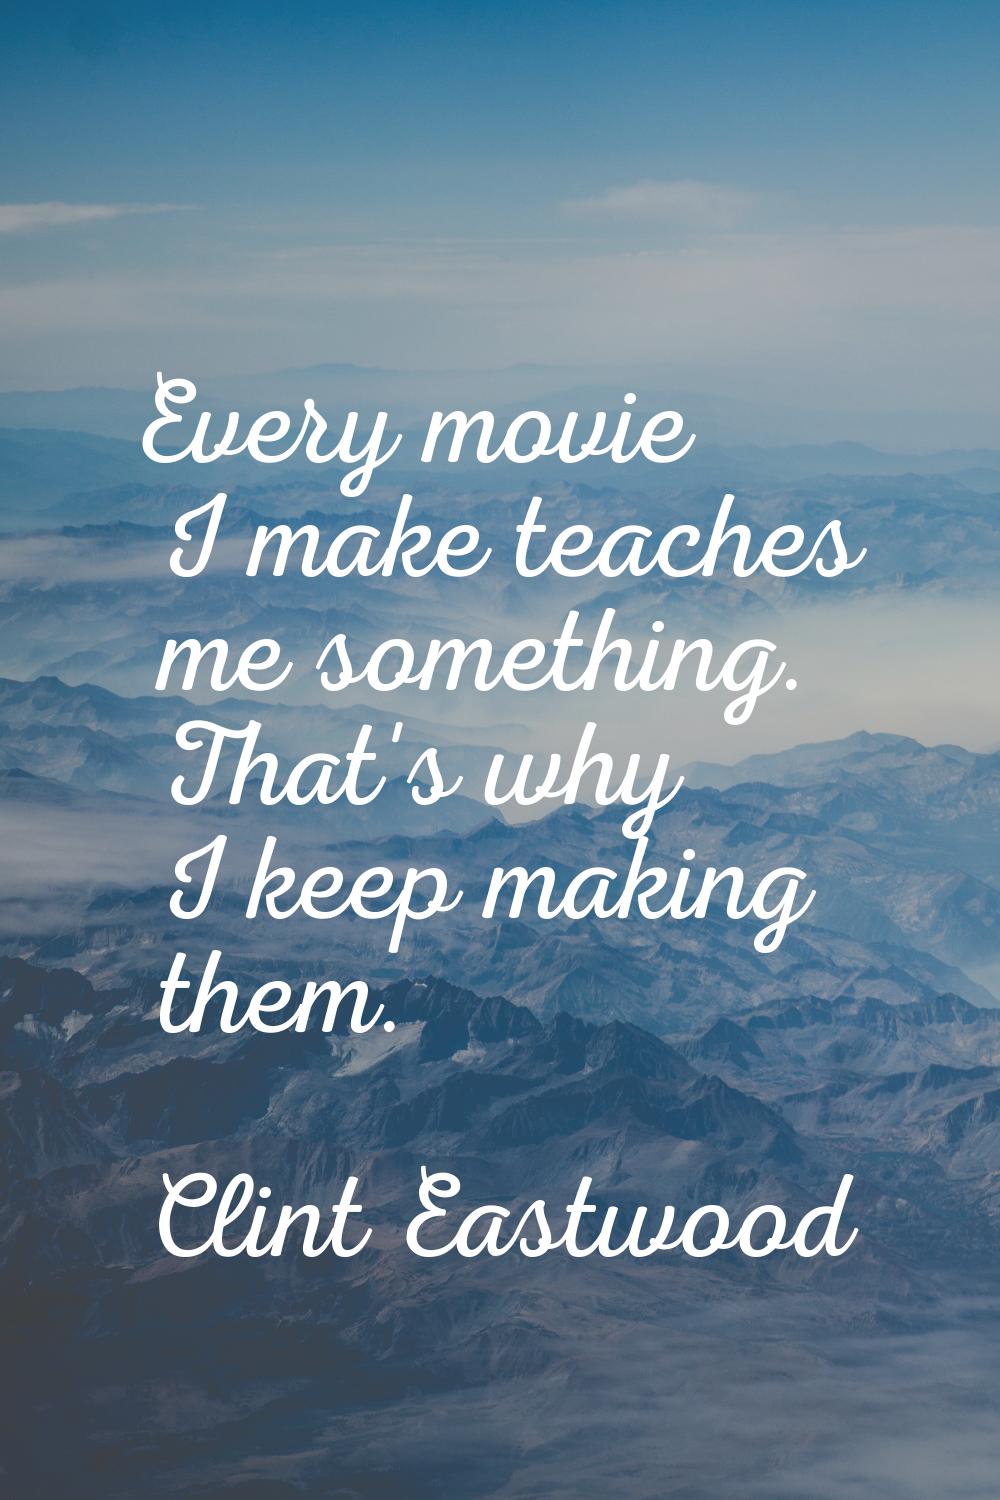 Every movie I make teaches me something. That's why I keep making them.